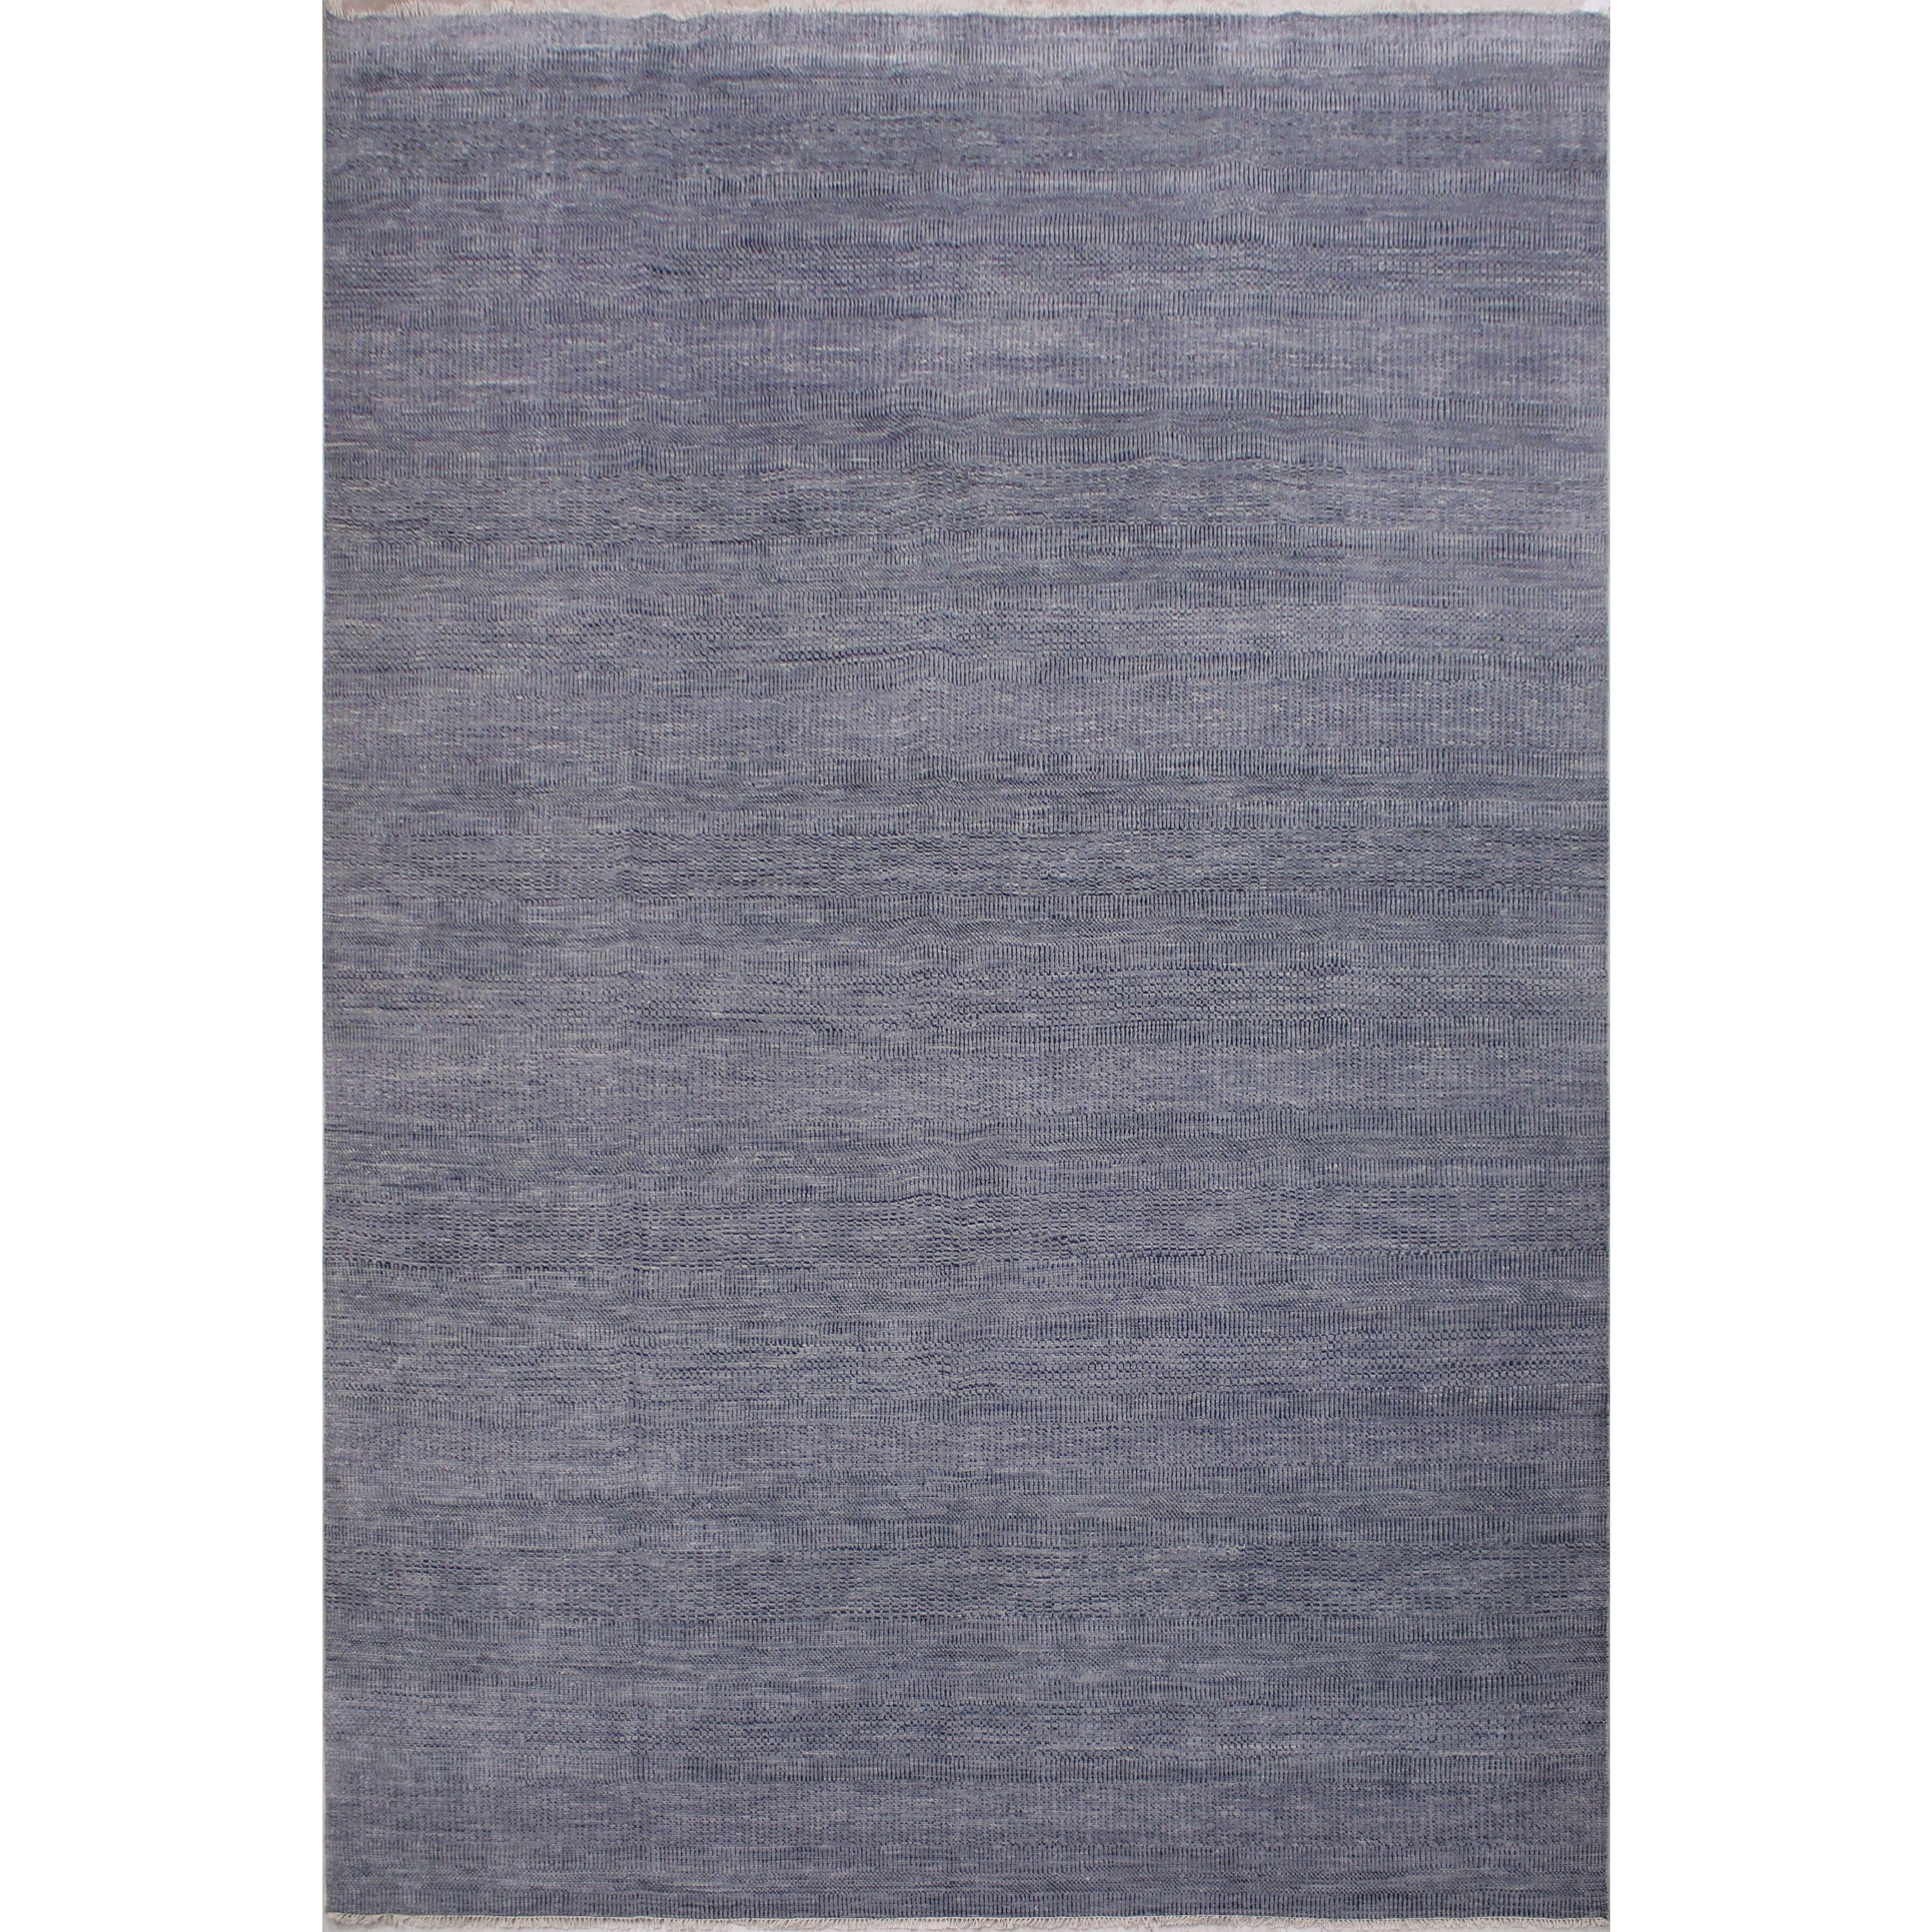 Fine Grass Modern Juan Gray Blue Wool Rug 10 2 X 14 0 10 Ft 2 In X 14 Ft 0 In 10 Ft 2 In X 14 Ft 0 In On Sale Overstock